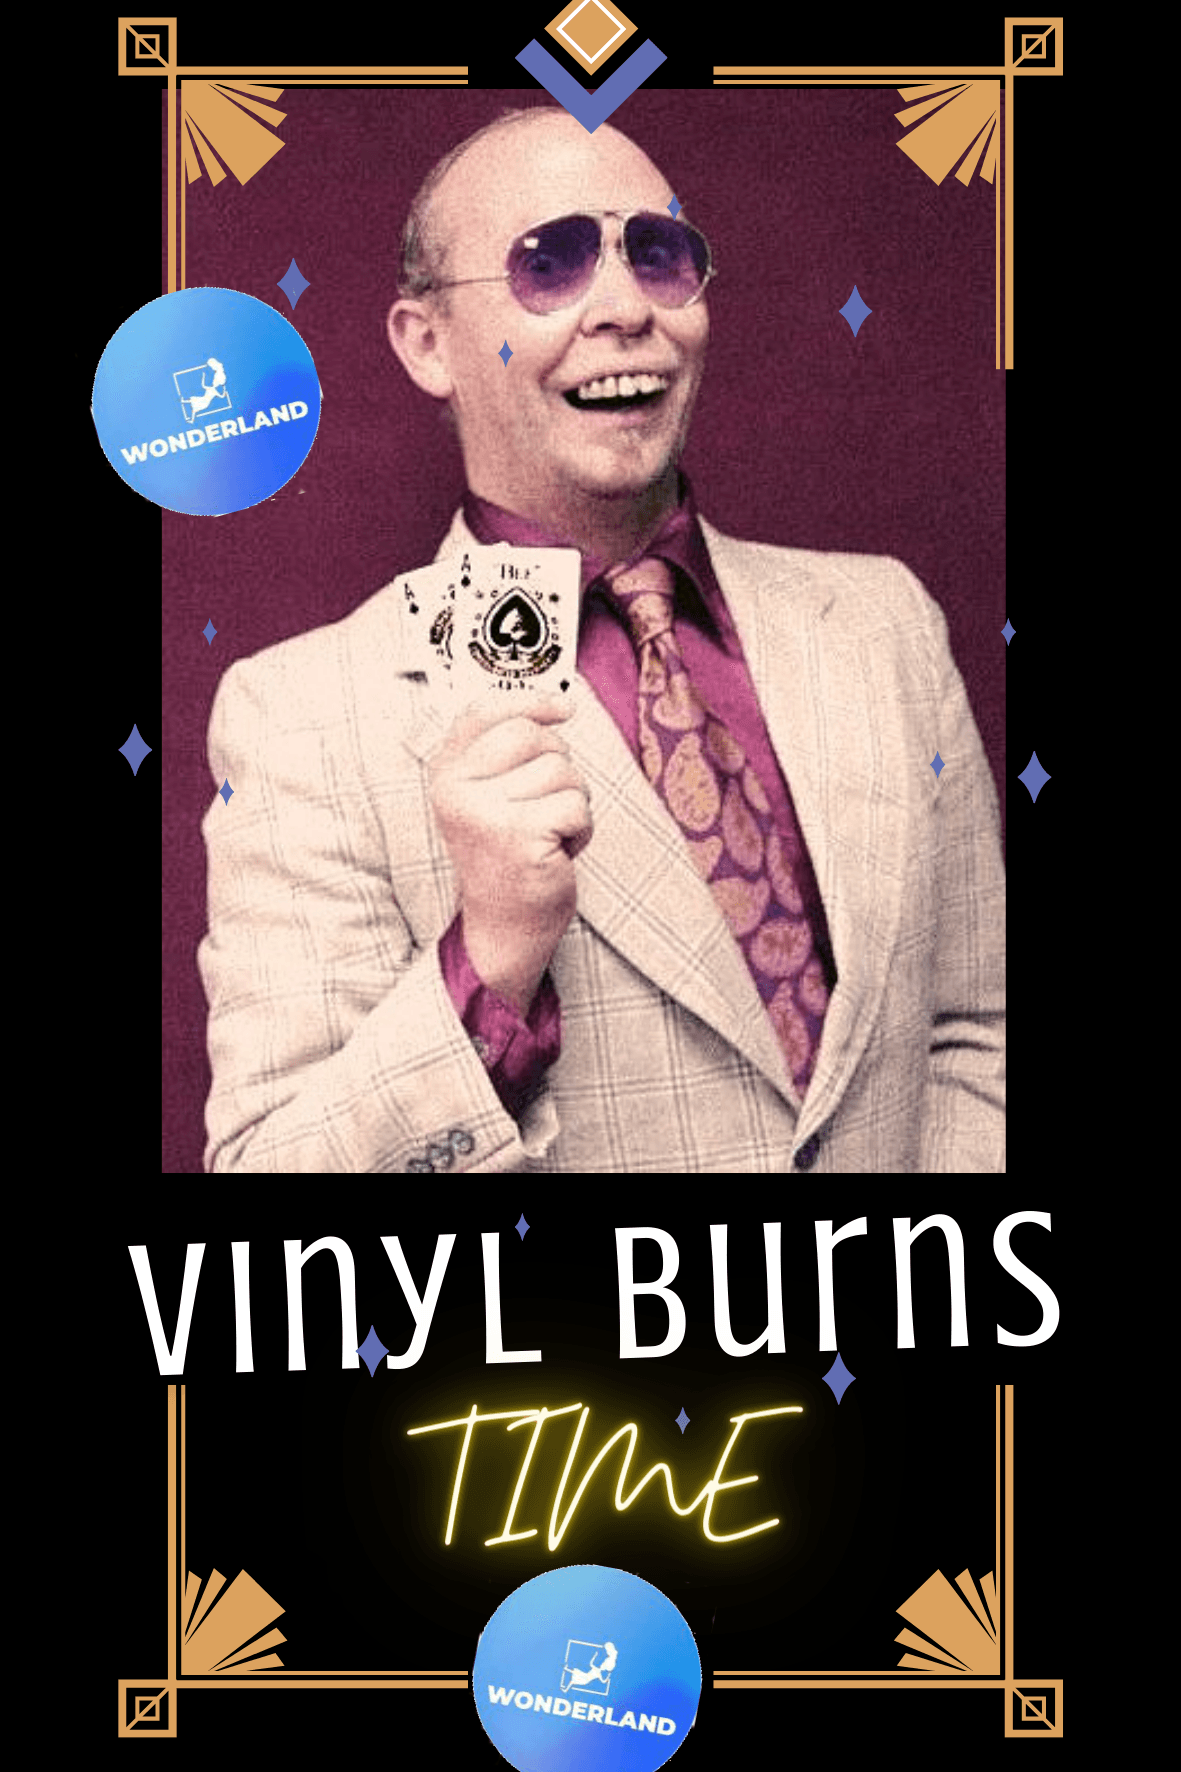 Vinyl Burns - TIME